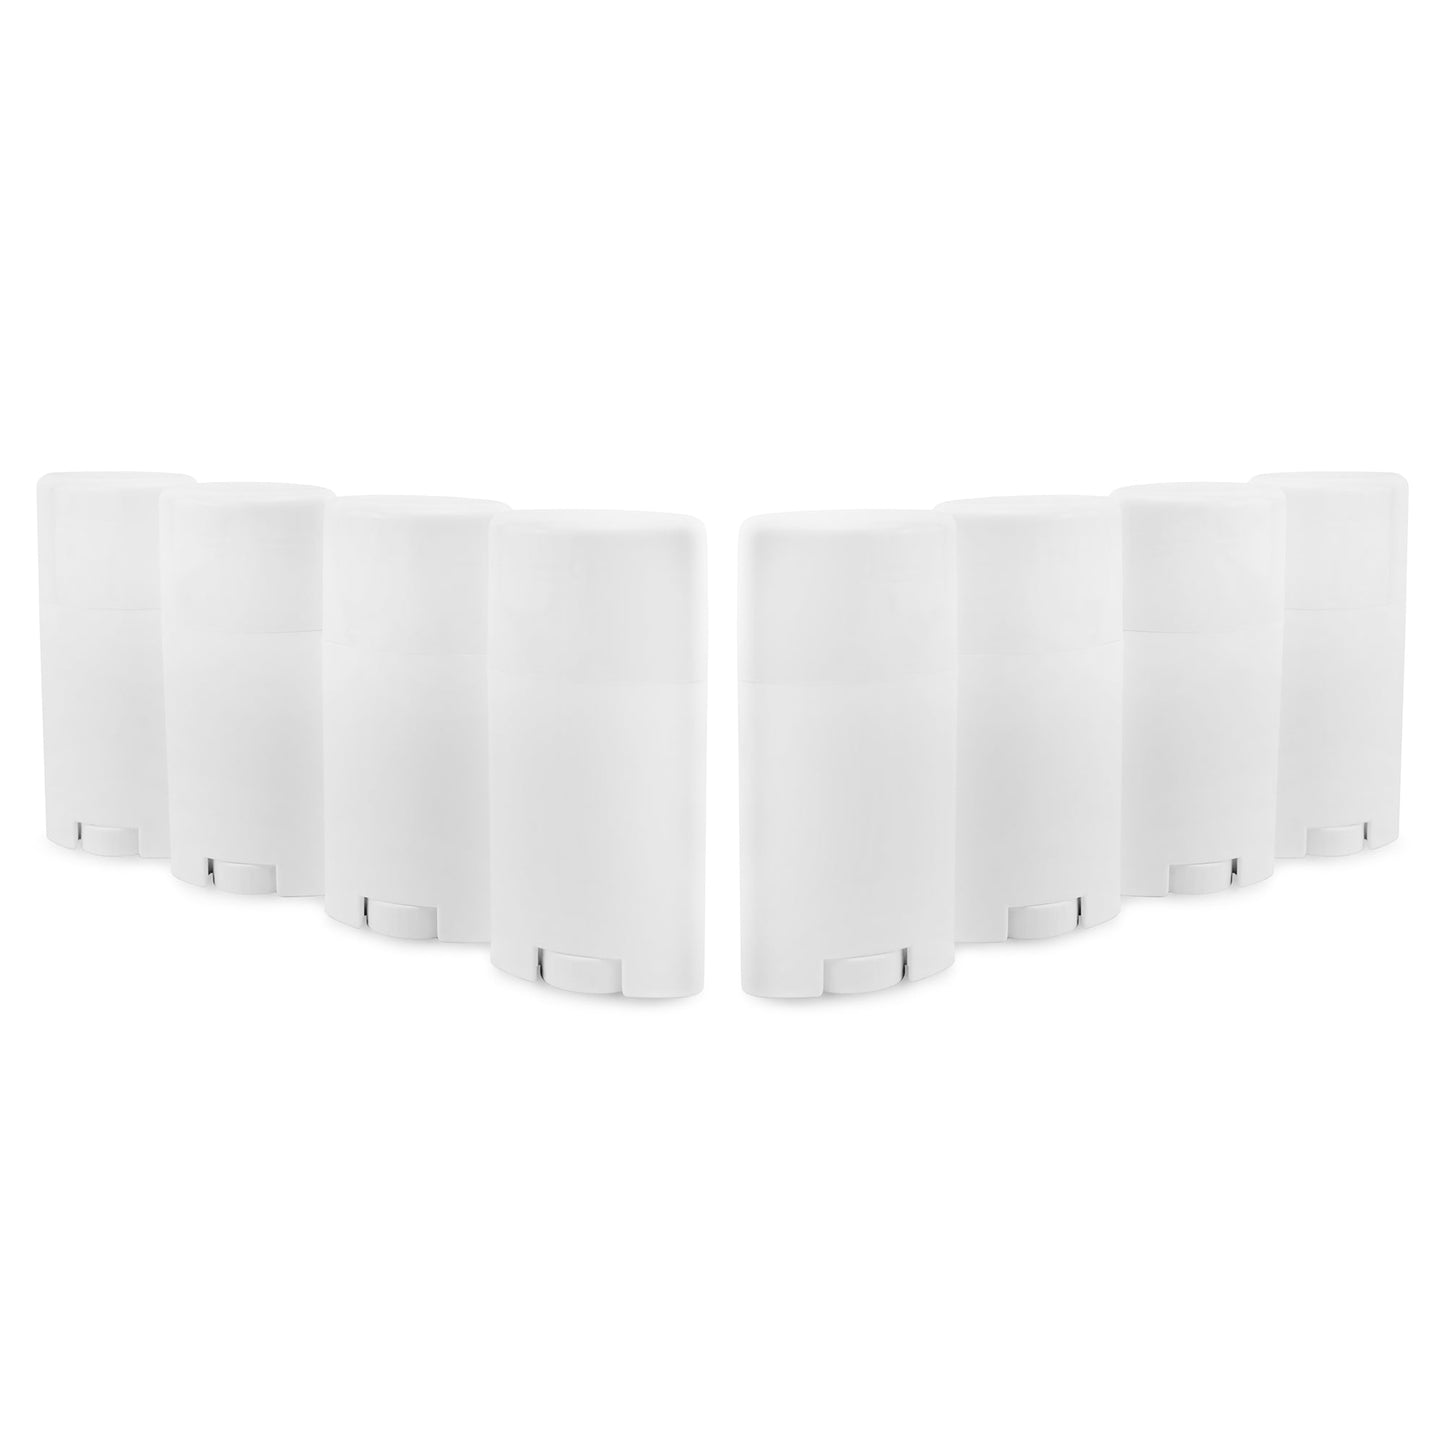 2.5oz / 75ml Deodorant Containers (8-Pack) - CBKit002